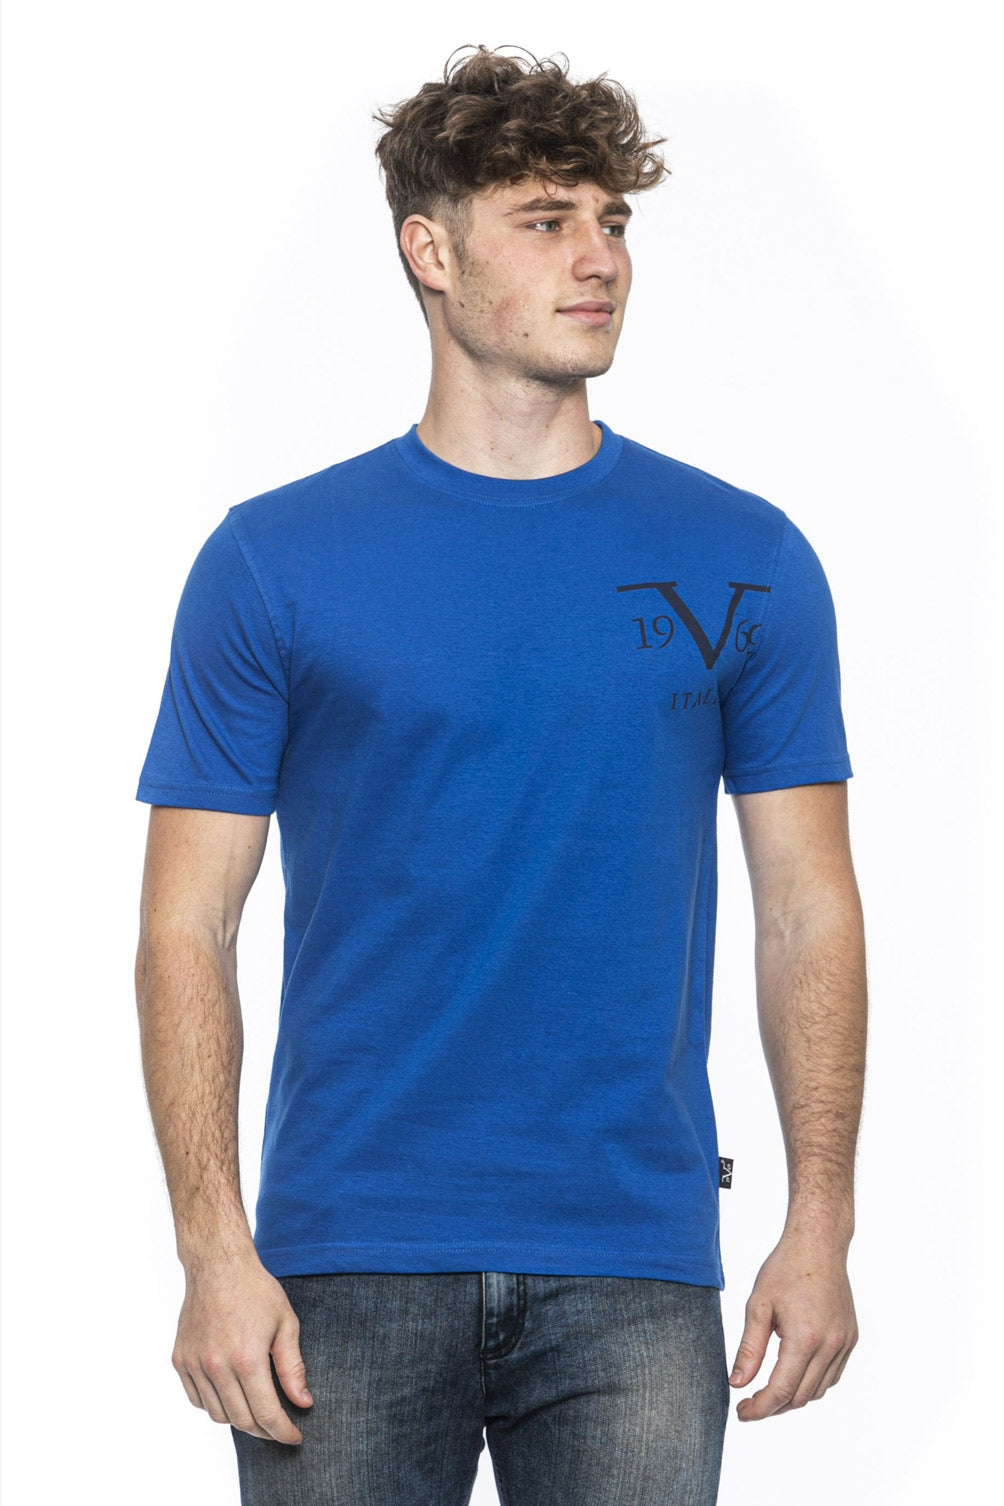 19V69 Italia Mens T-Shirt Blue MIKE ROYAL BLUE